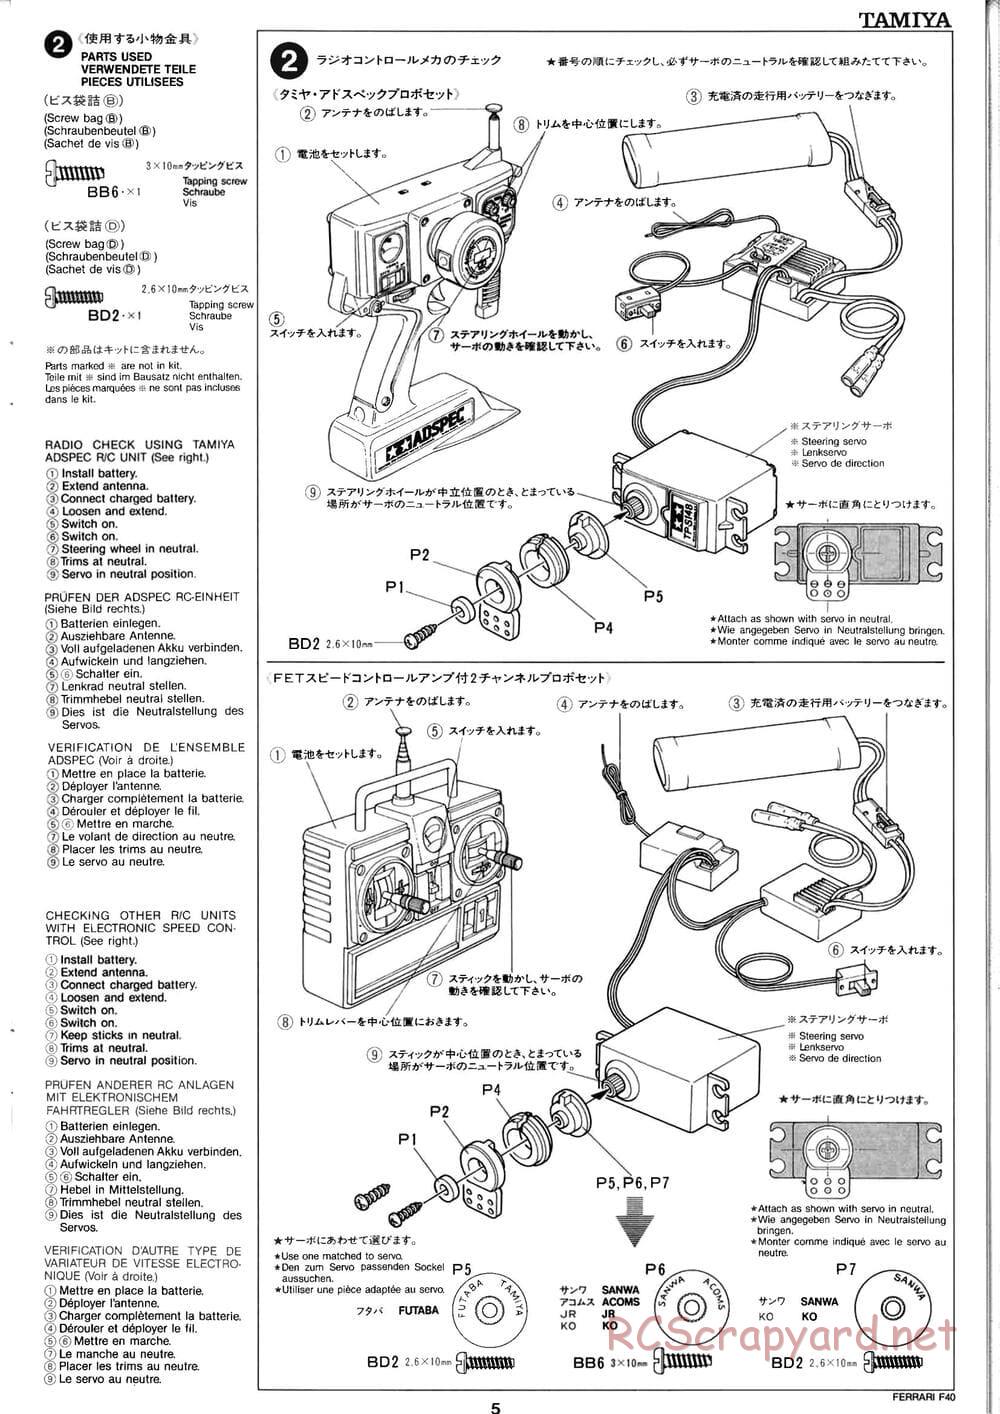 Tamiya - Ferrari F40 - Group-C Chassis - Manual - Page 5